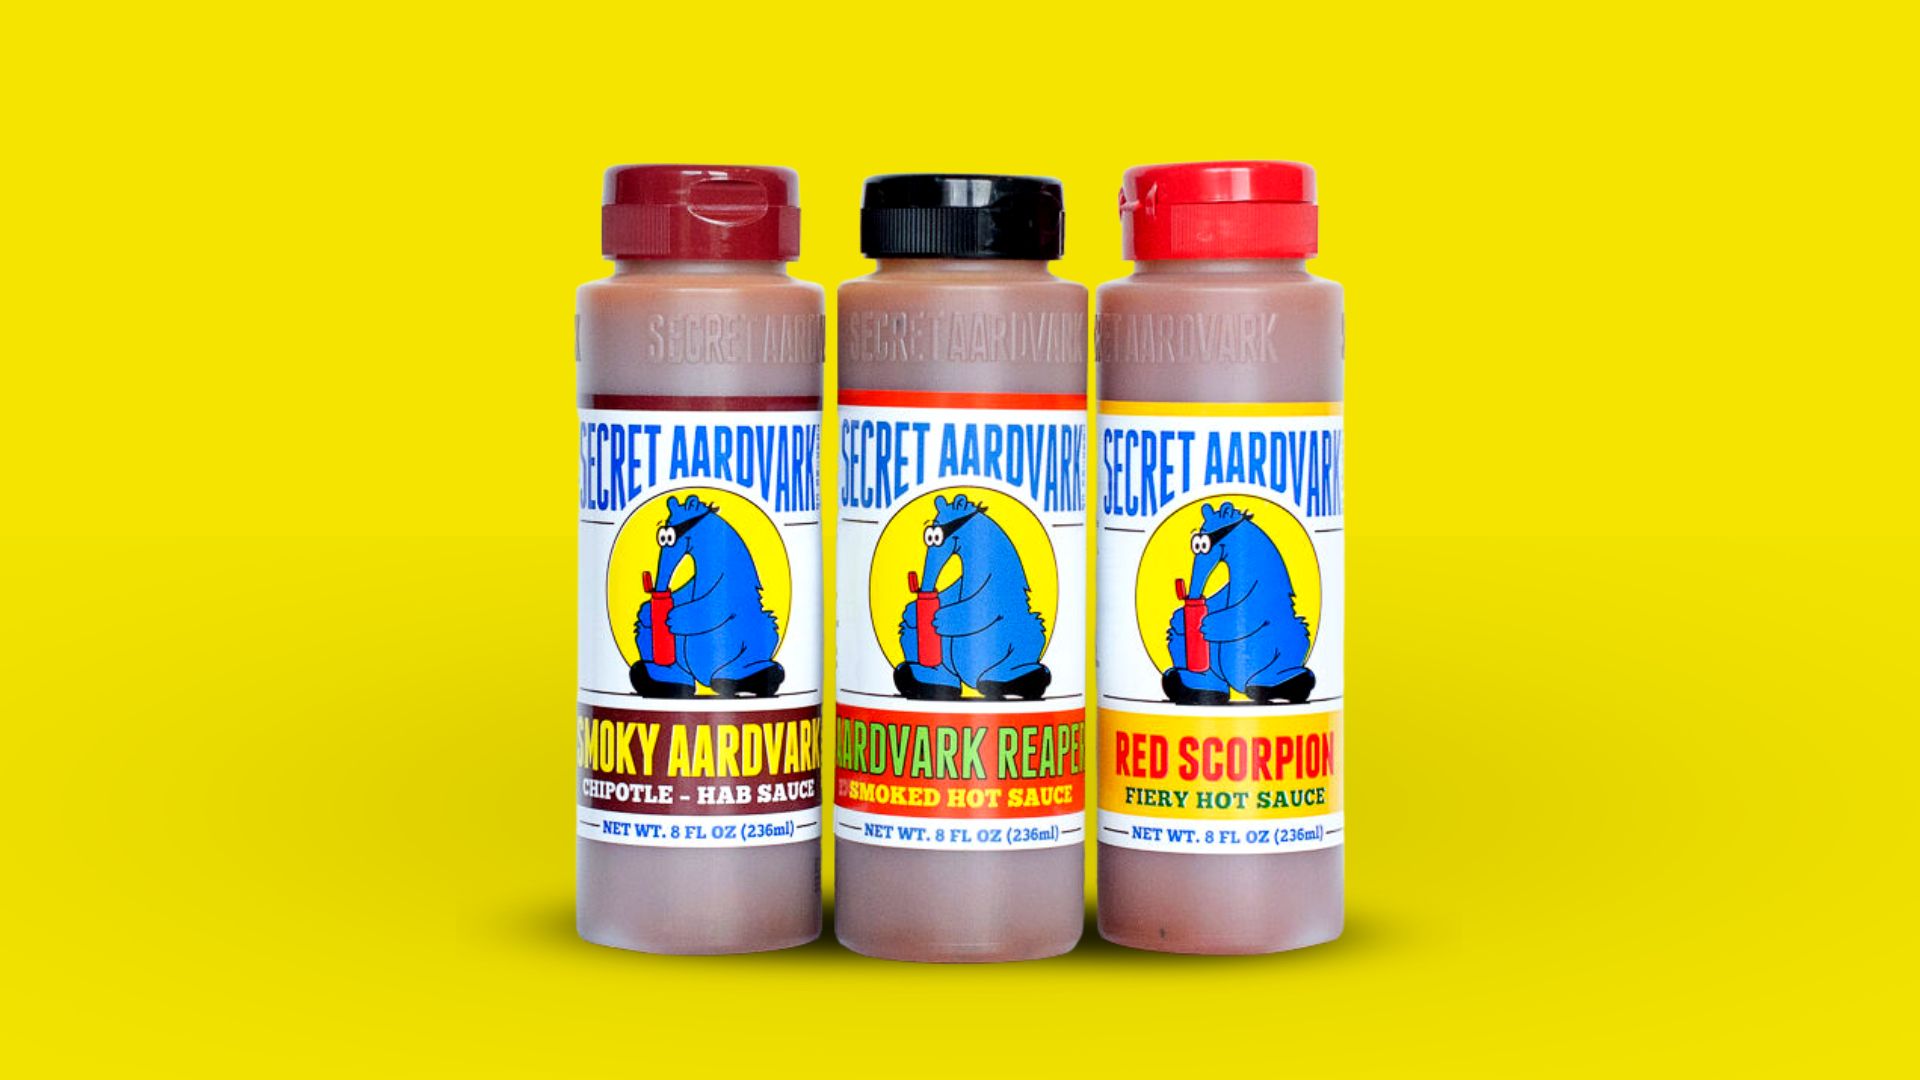 Secret Aardvarks Three New Hot Sauces